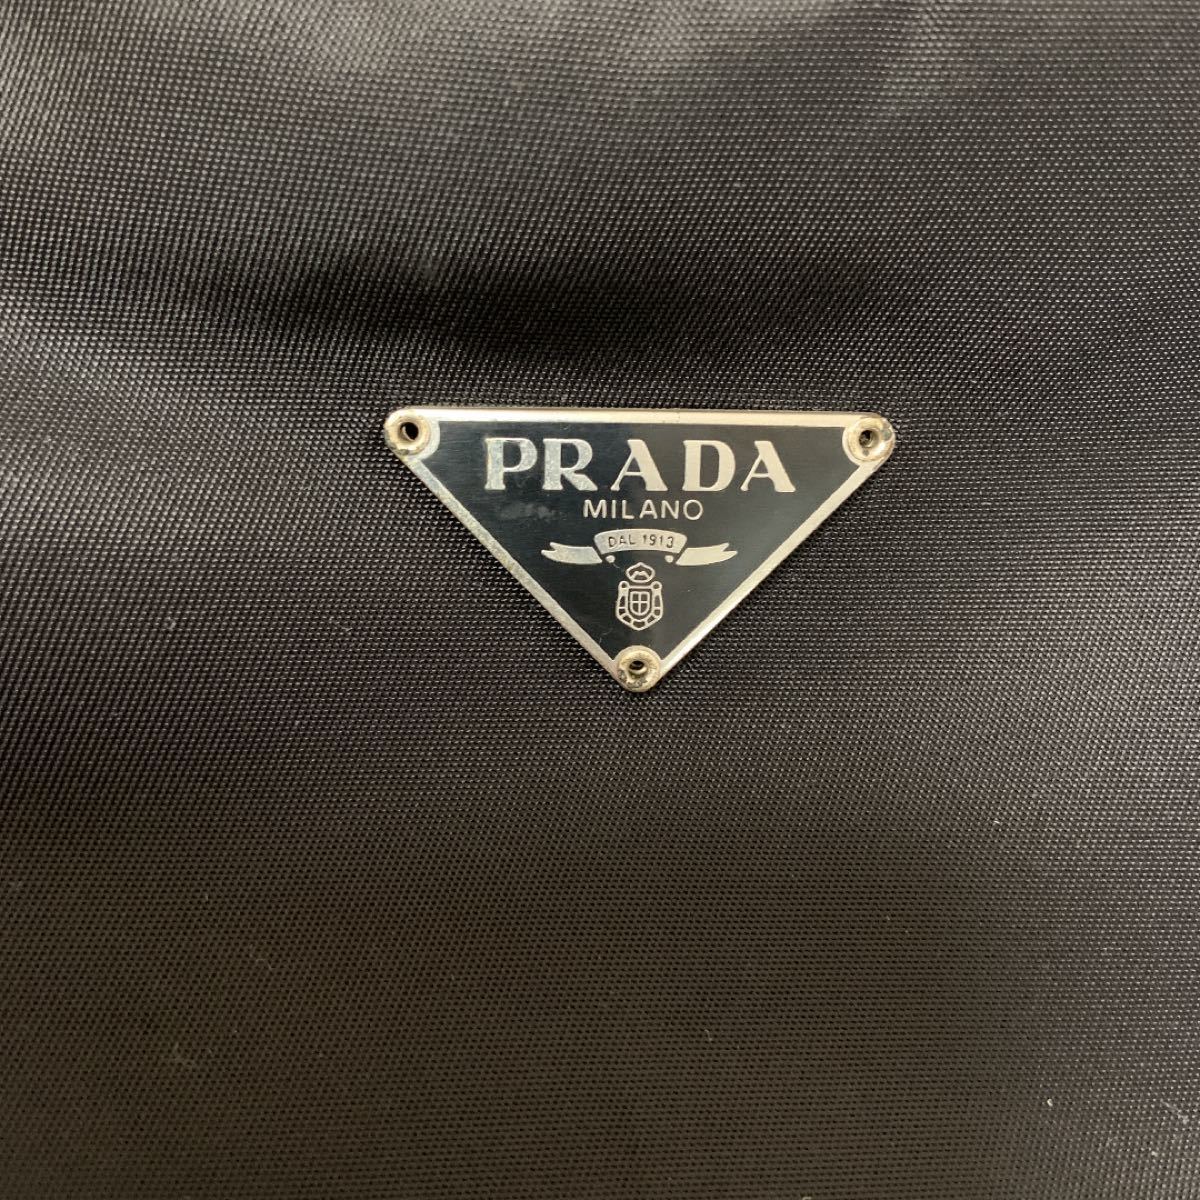 PRADA プラダ ハンドバッグ 黒ナイロン - 18